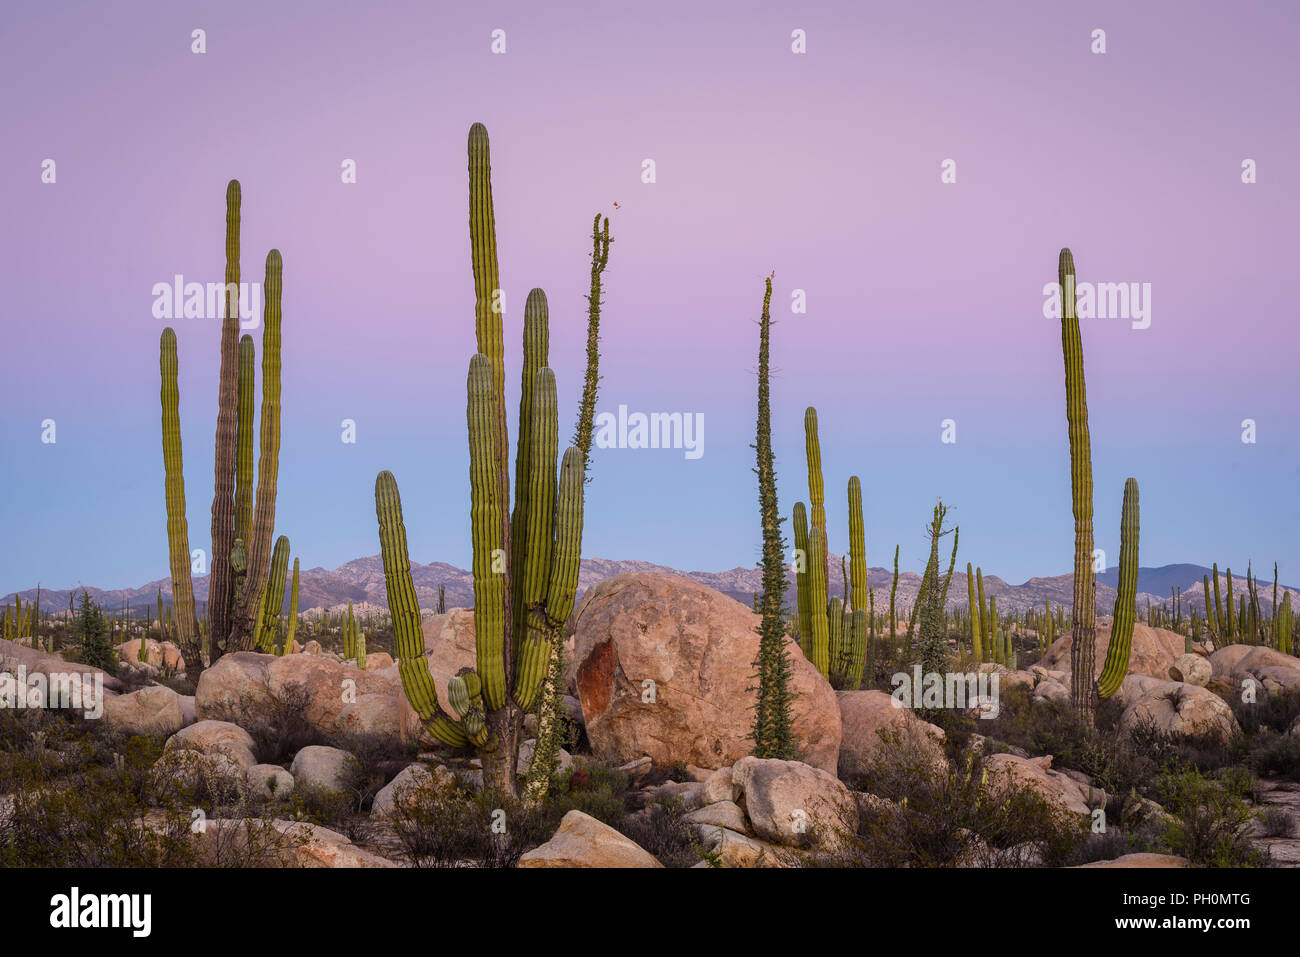 Cardon cactus et arbres Boojum dans Valle de los cirios, Désert Catavina, Baja California, Mexique. Banque D'Images